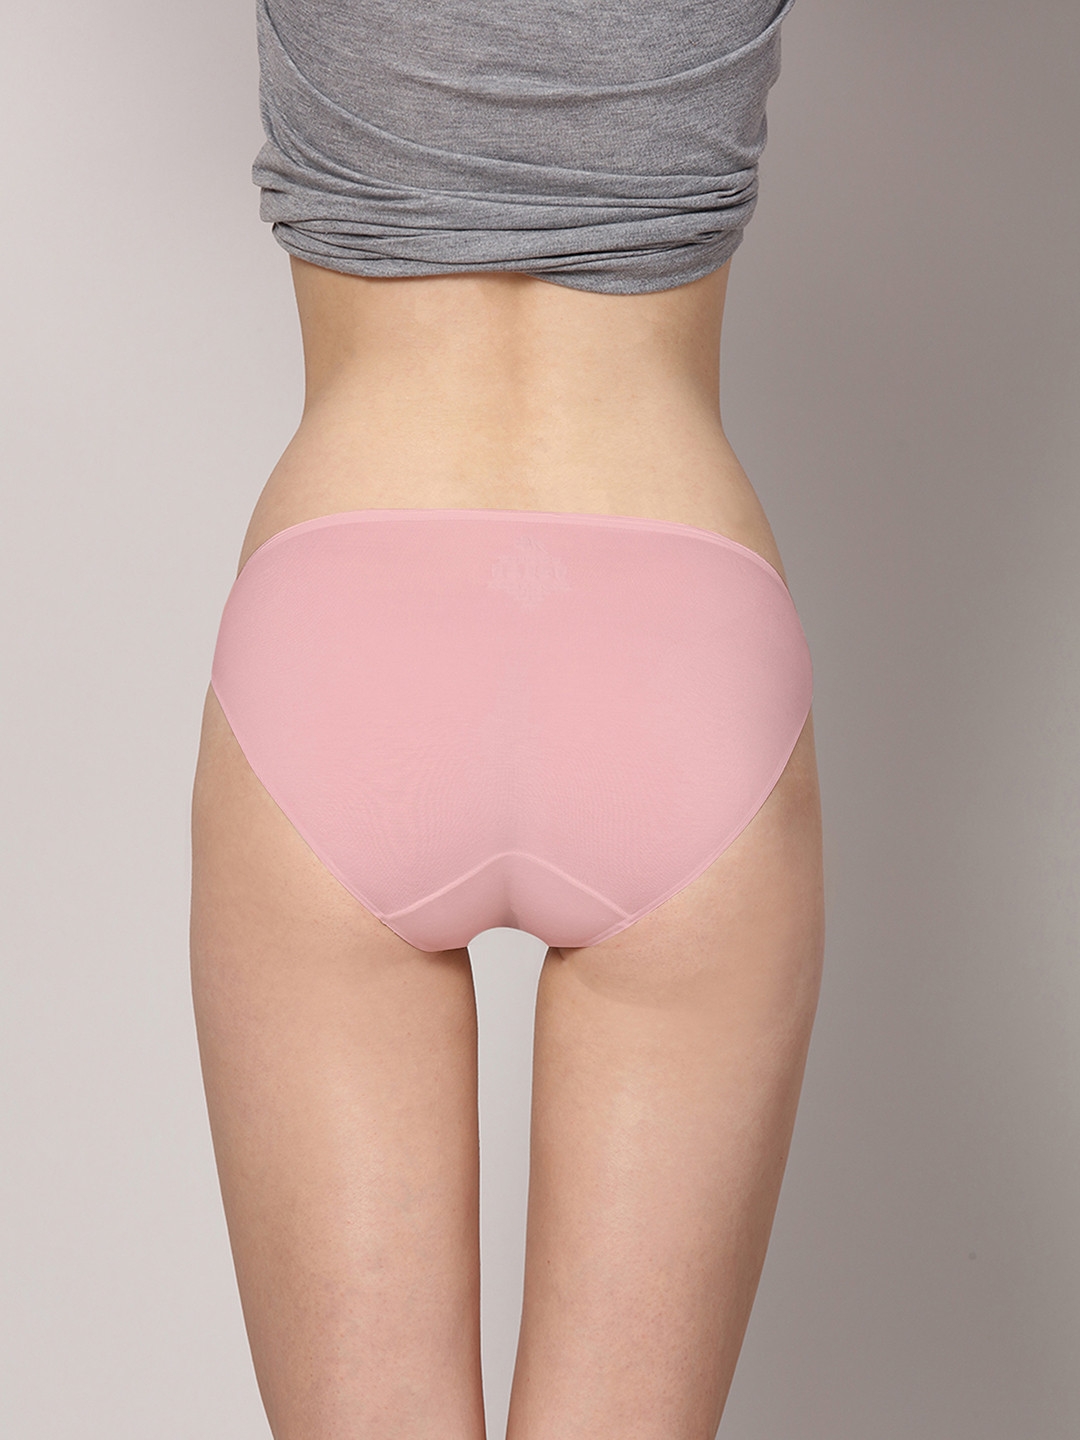 AshleyandAlvis Women's Panties Micro Modal, Anti Bacterial, Skinny Soft, Premium Bikini-No Itching, Sweat Proof, Double In-seam Gusset